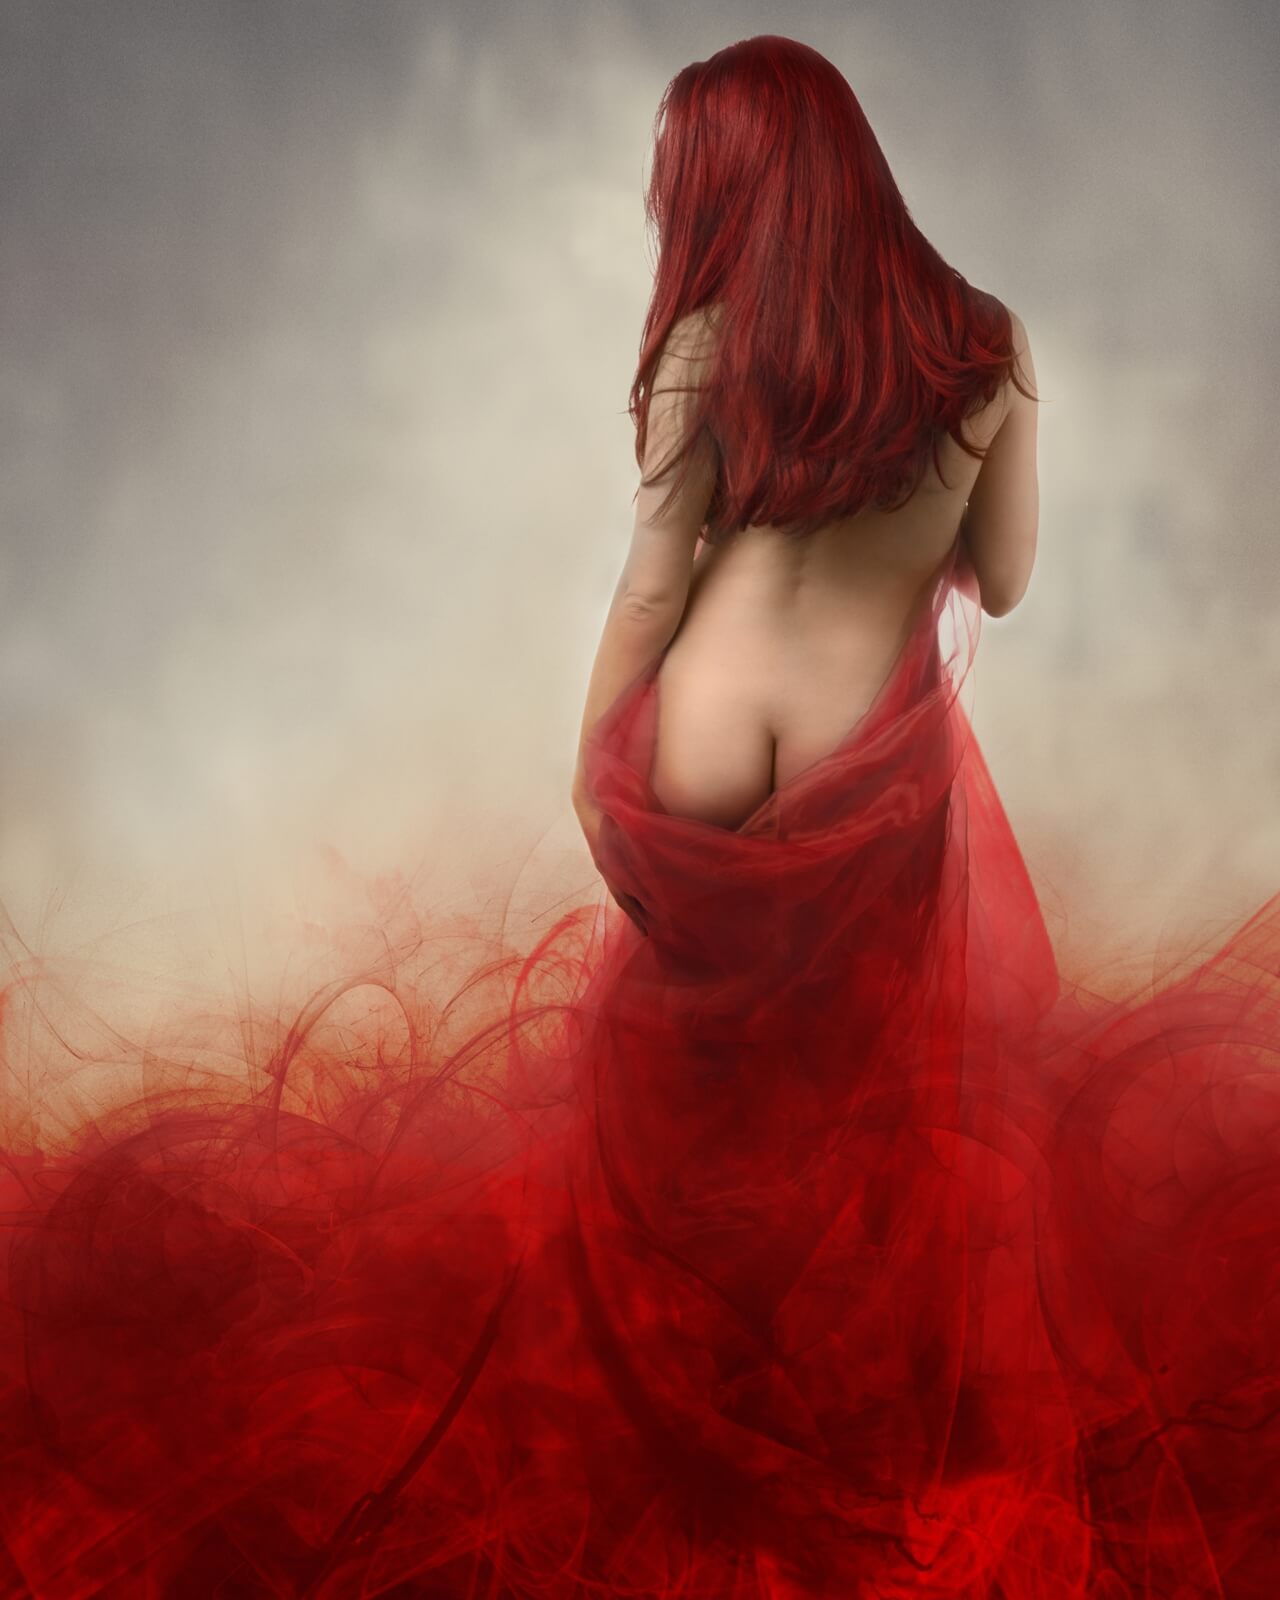 Vlies Tapete XXL Poster Fototapete Erotik Lady in red